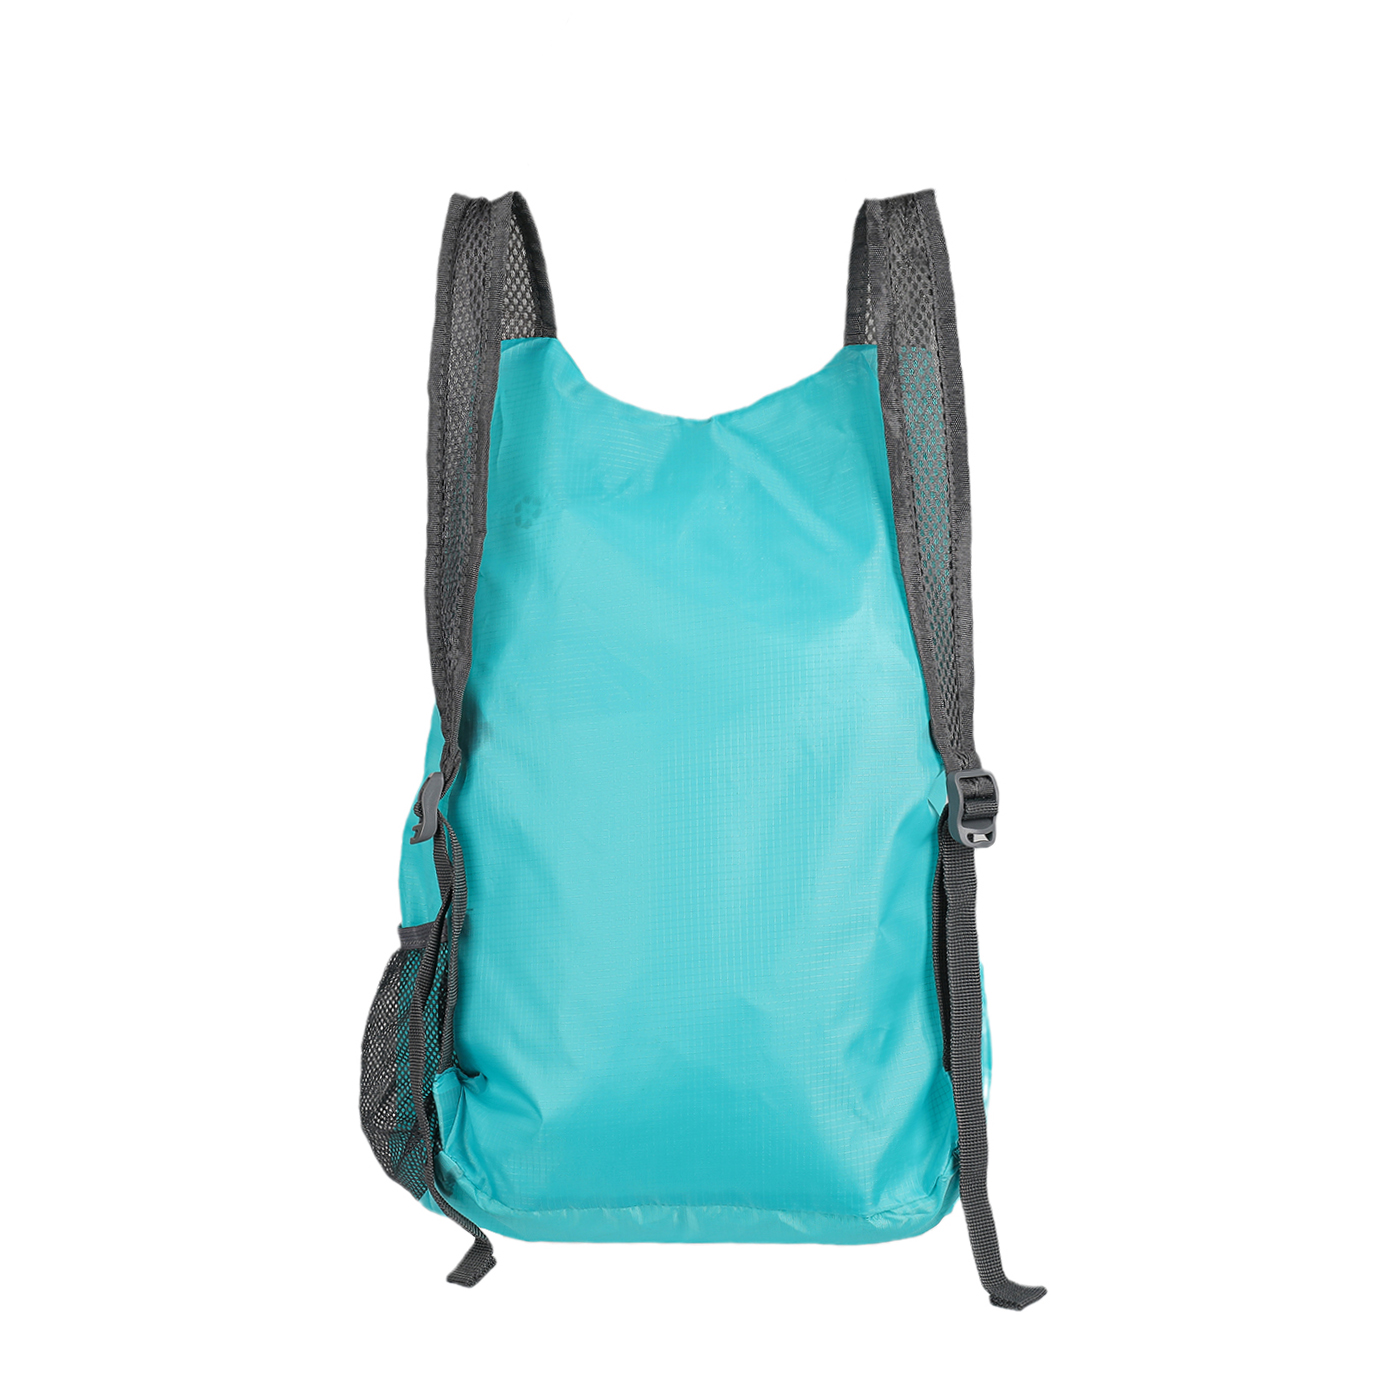 Promotional Lightweight Foldable Backpack3